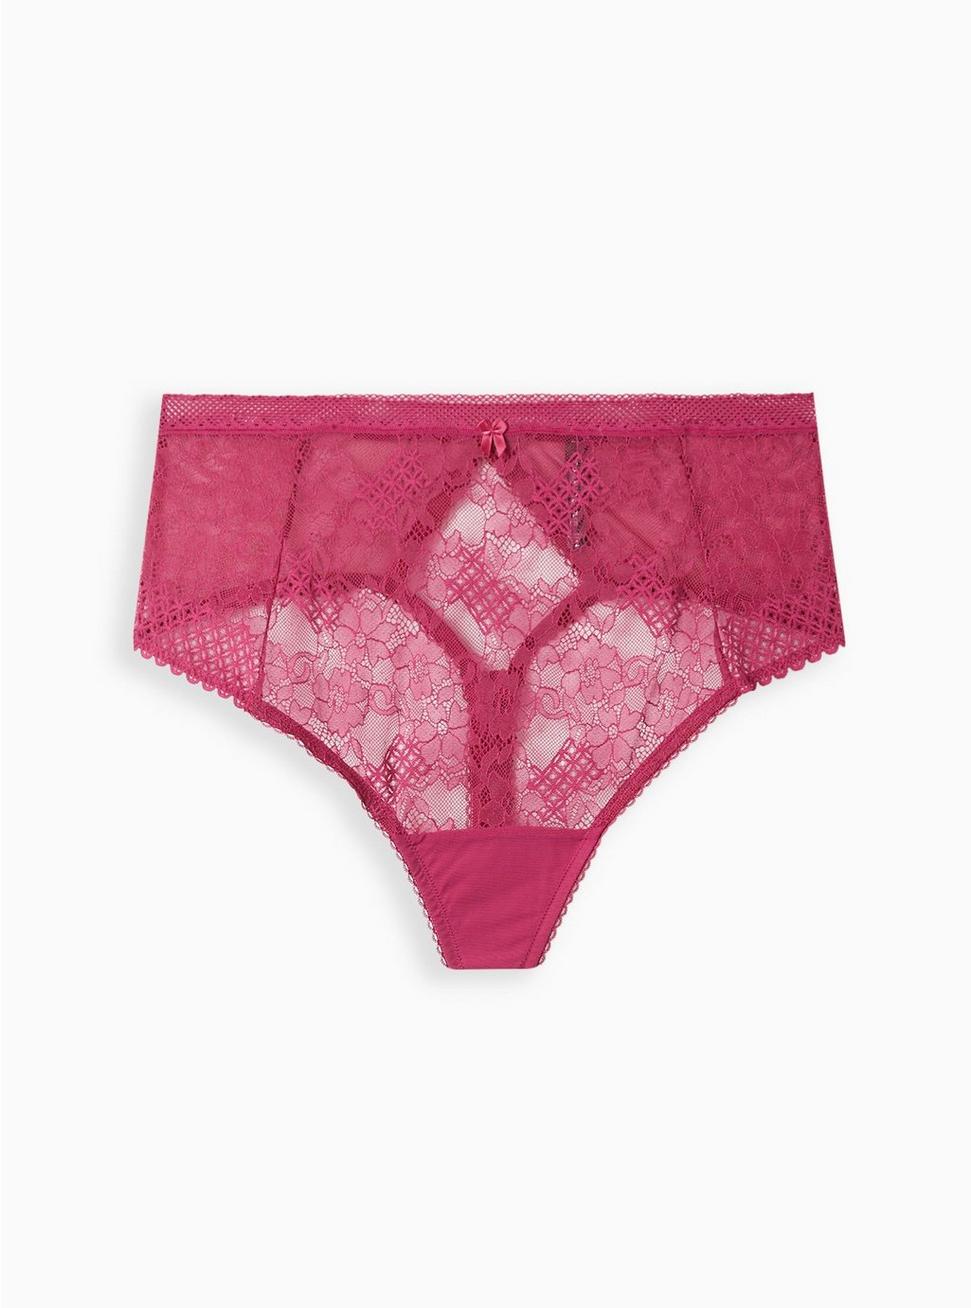 Plus Size - High Waist Thong Cutout Panty - Lace Fuchsia - Torrid